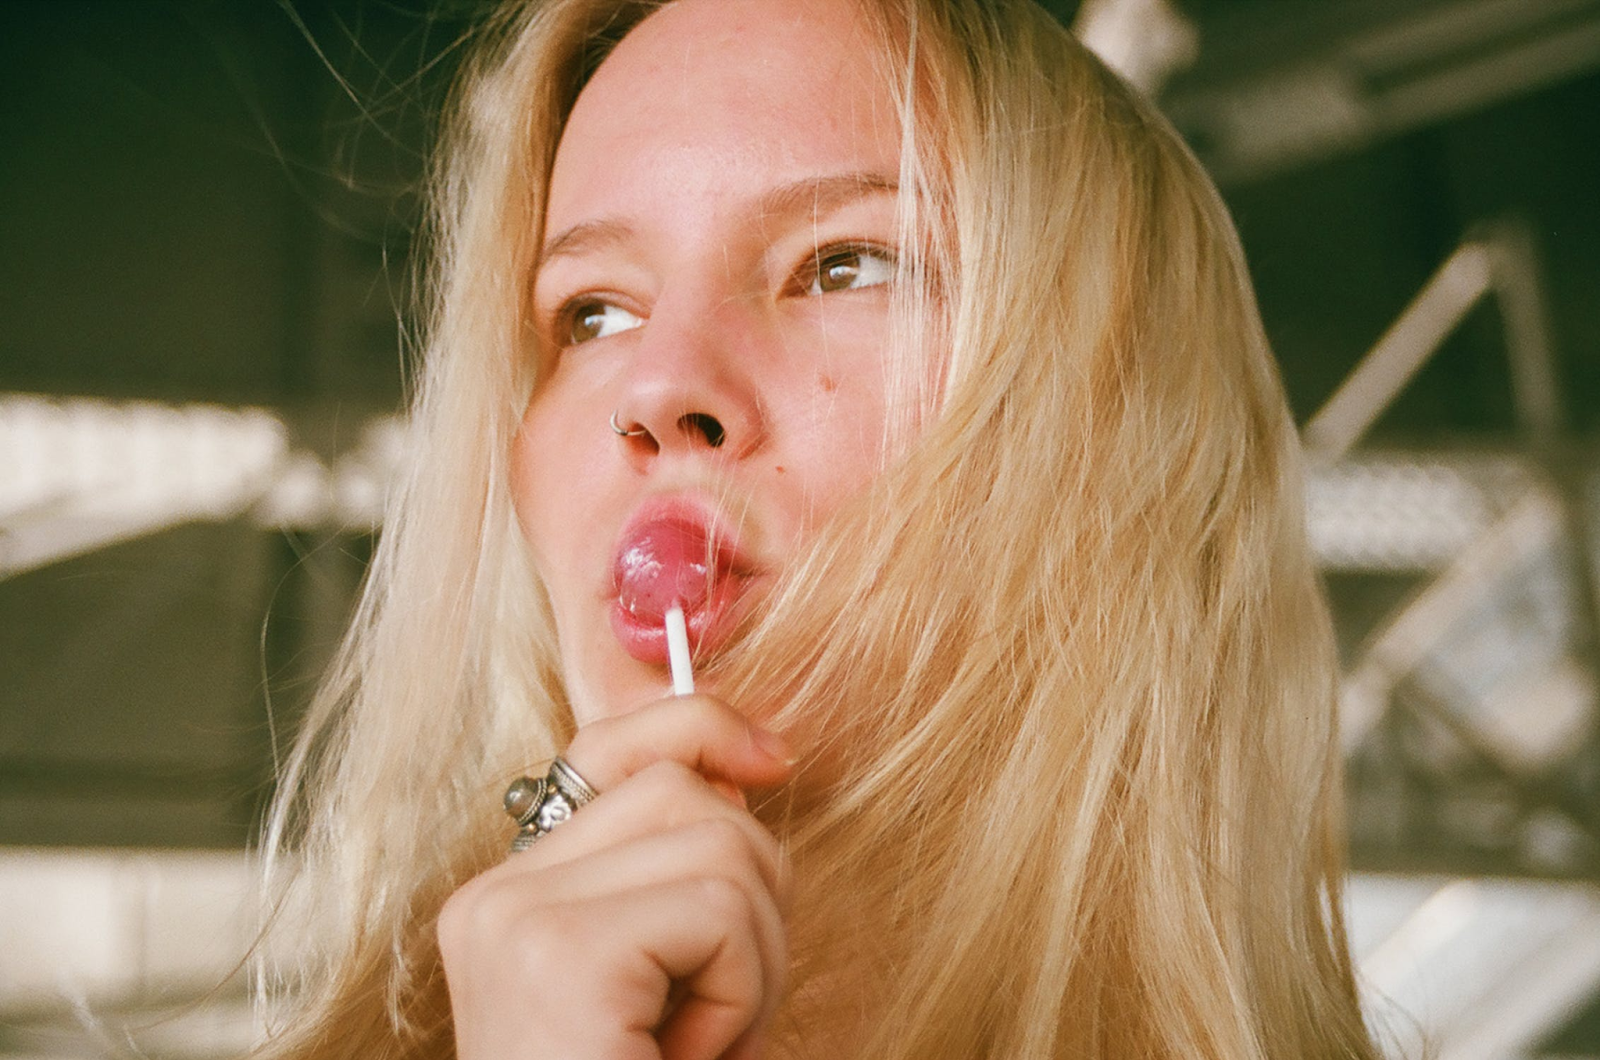 A woman sucking on a lollipop